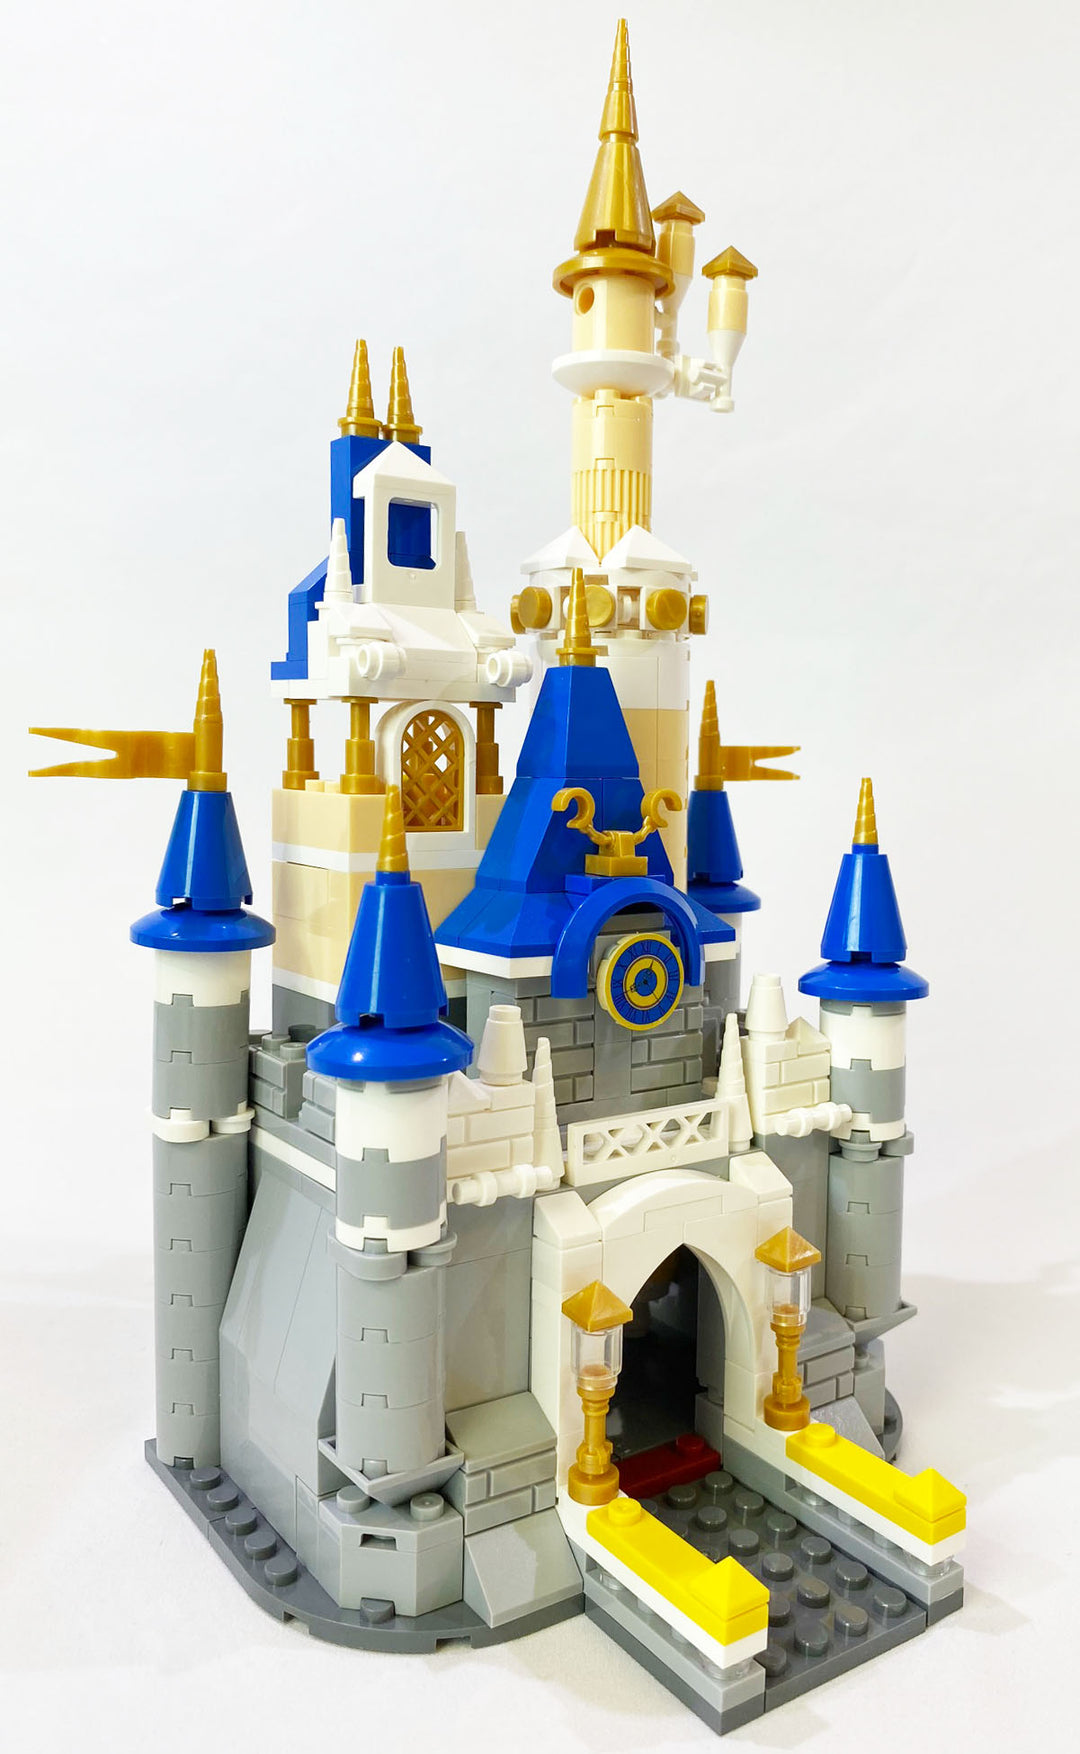 Enchanted Dream Castle Brick Set with FREE LED Light Kit